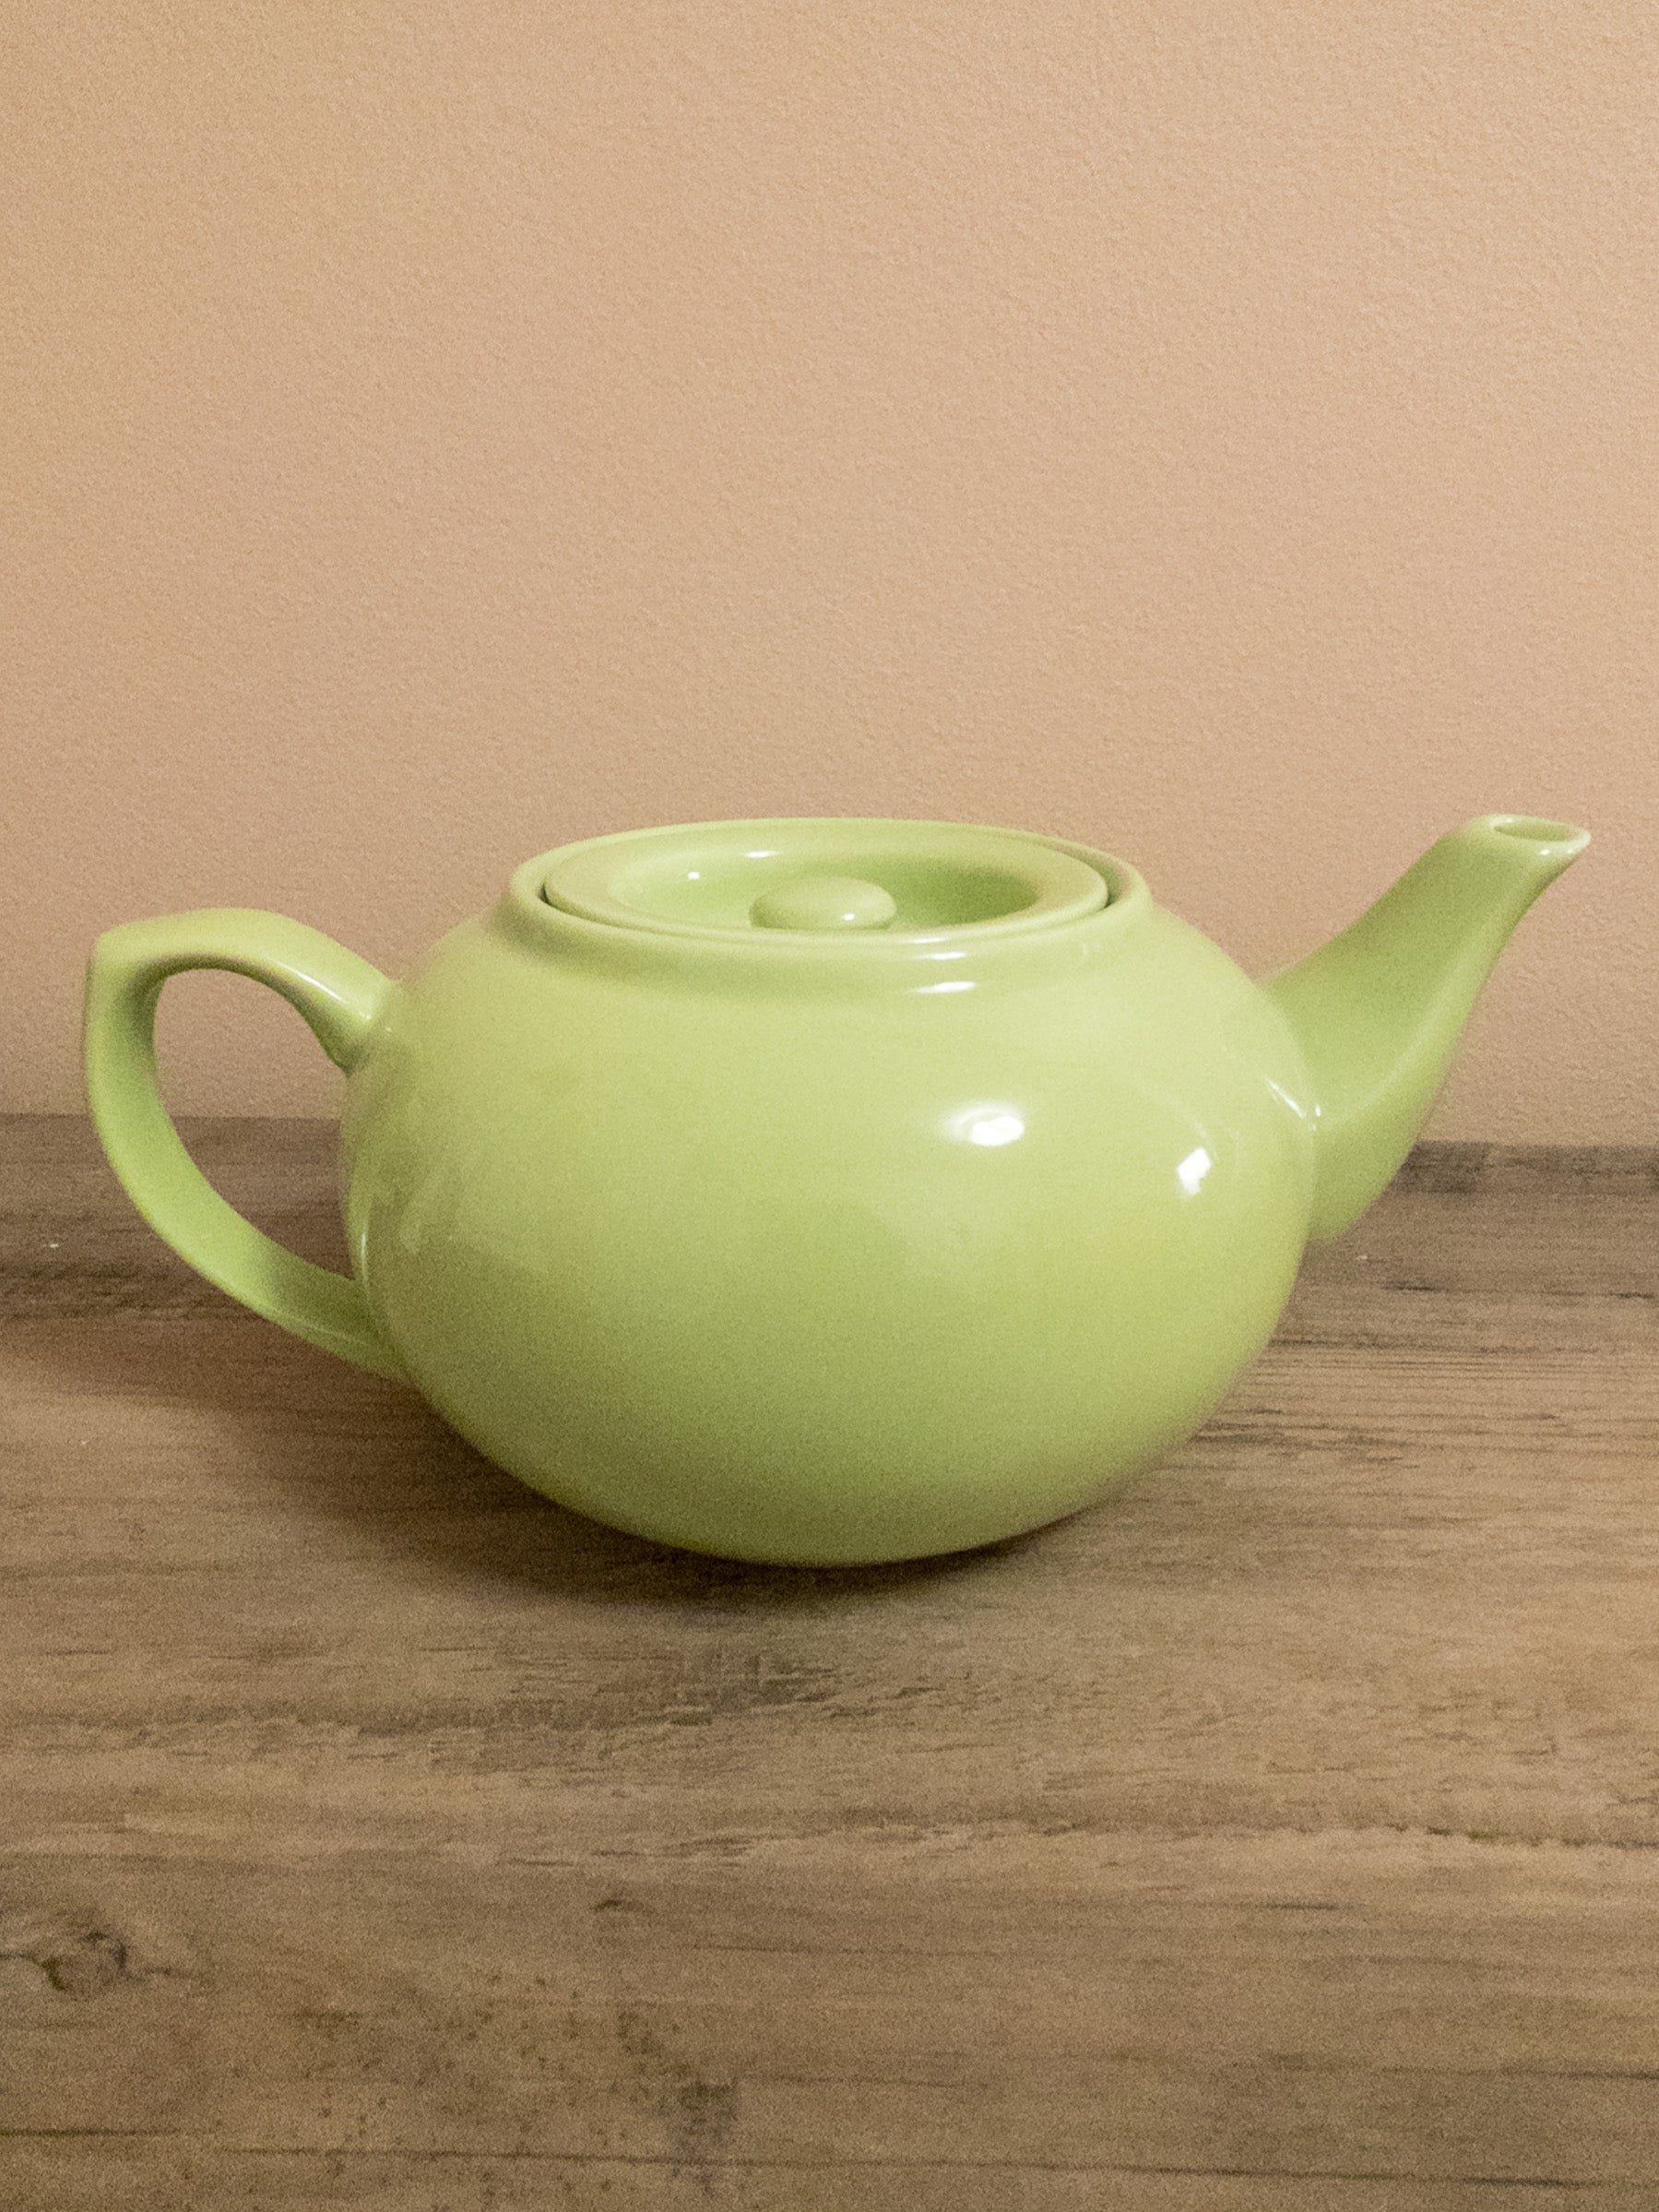 Green ceramic teapot.